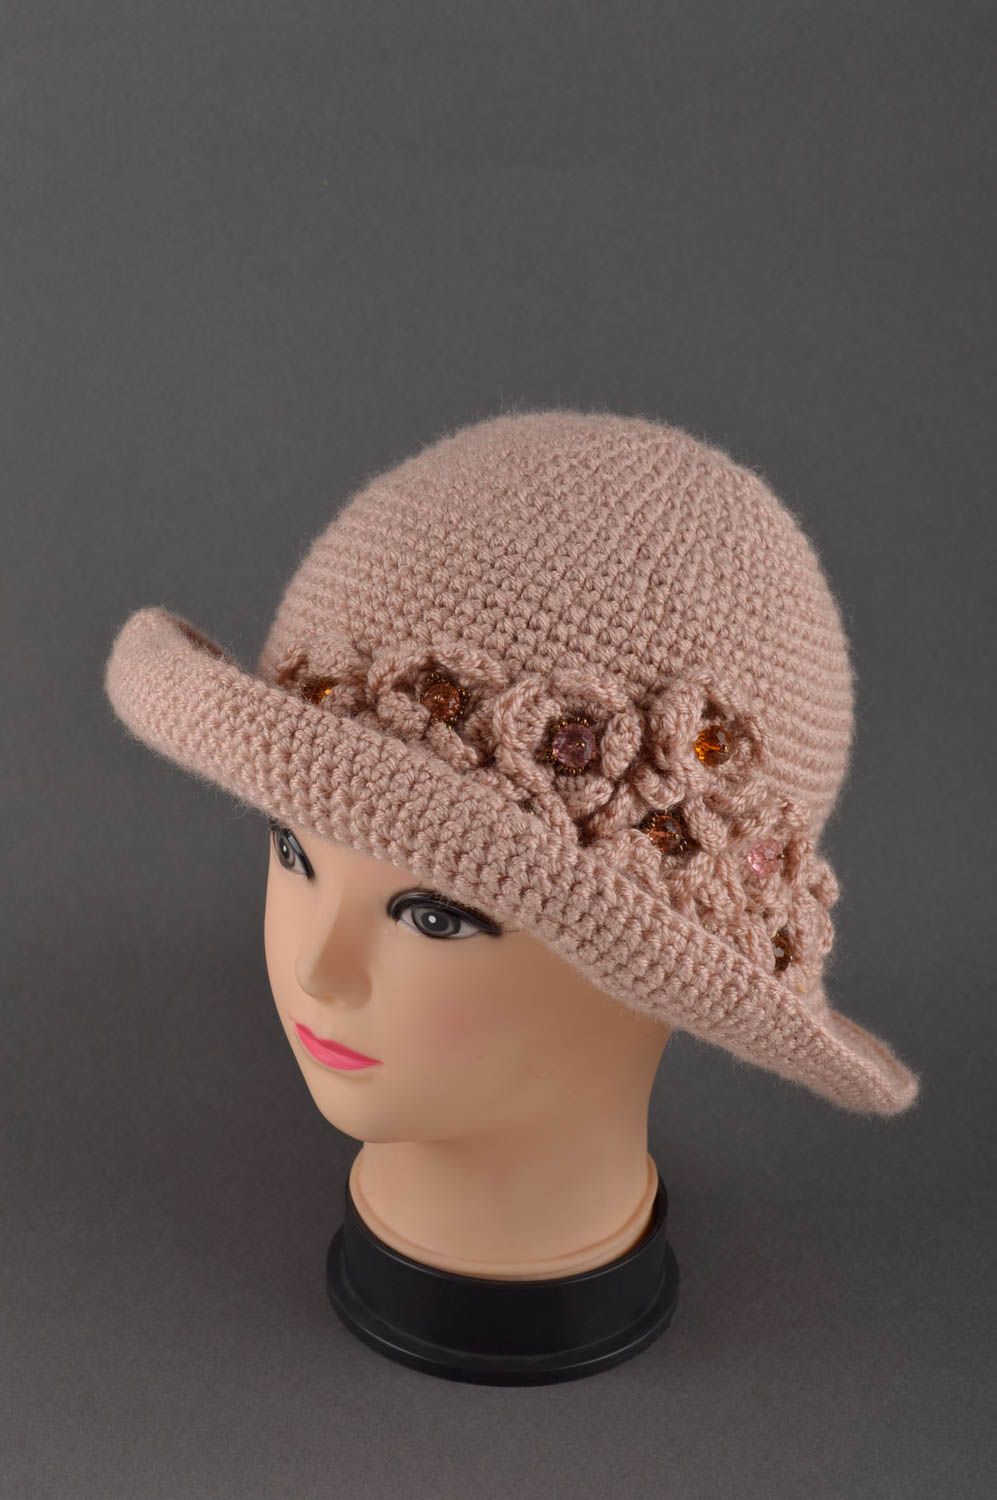 Handmade sun hat ladies sun hat fashion accessories gifts for women summer hat photo 1